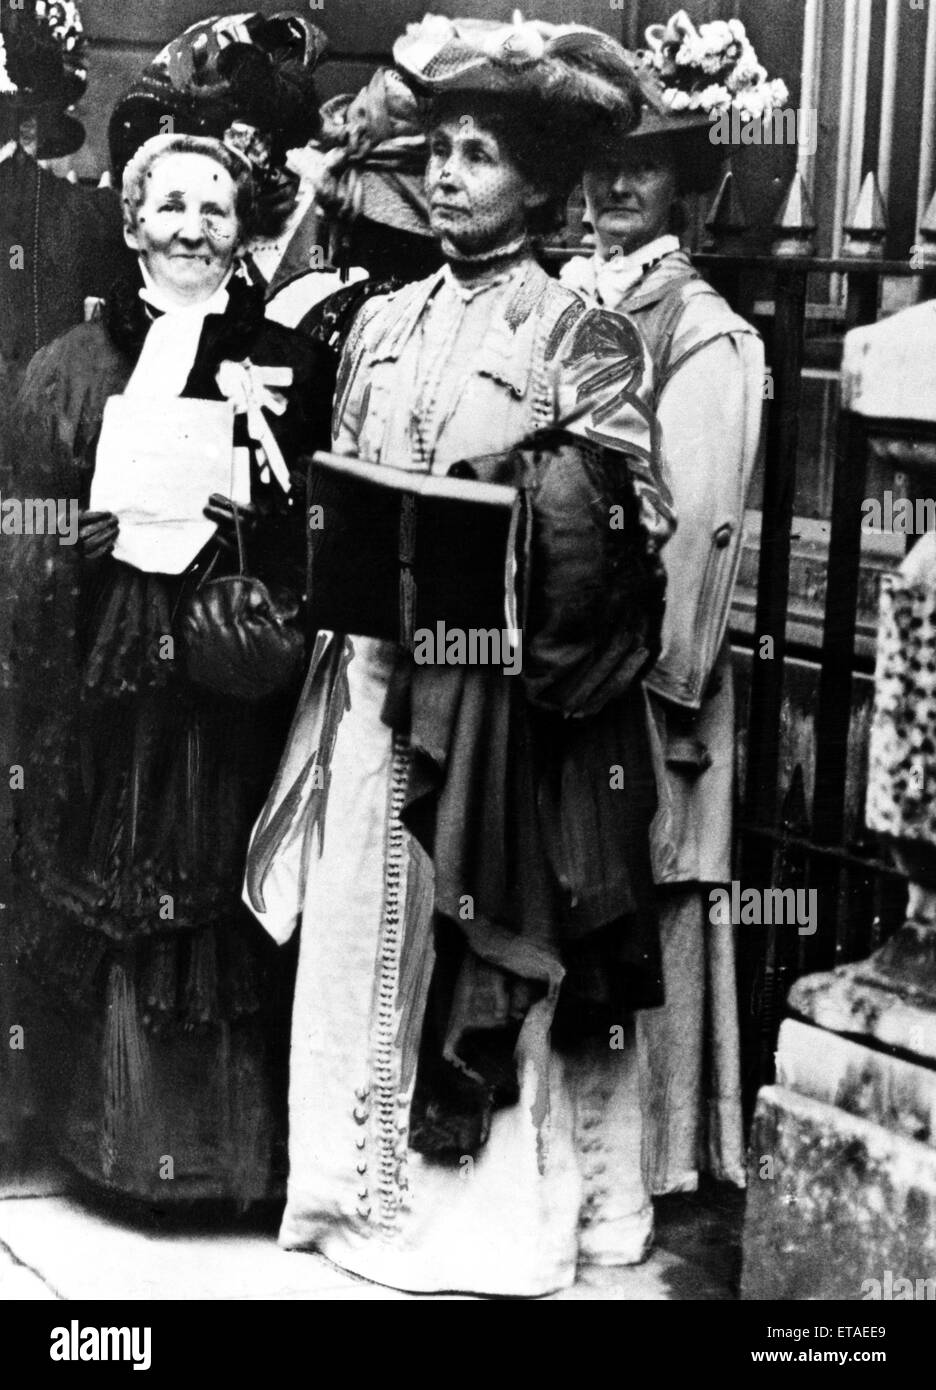 Suffragettes, on the left is Mrs Solomon, centre is Emmeline Pankhurst, circa 1910. Stock Photo